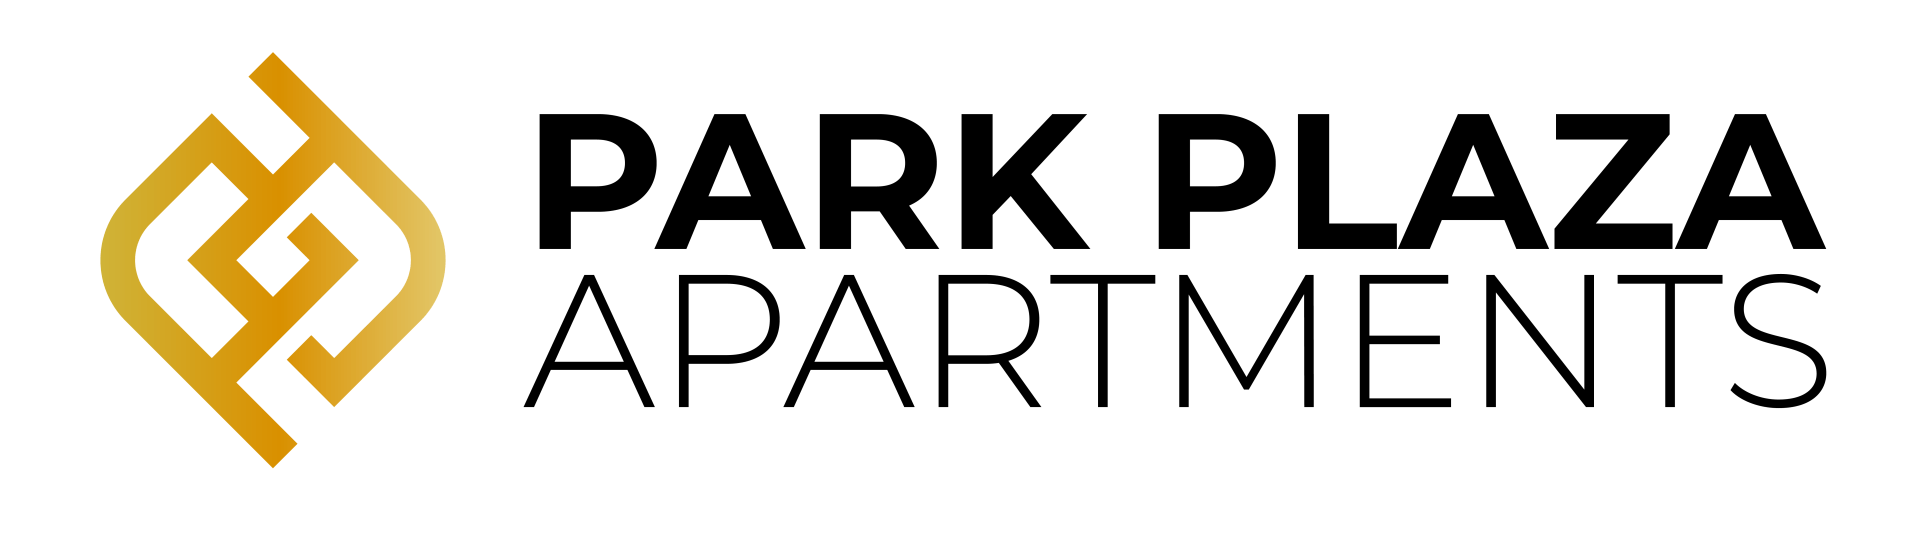 Park Plaza Apartments Logo